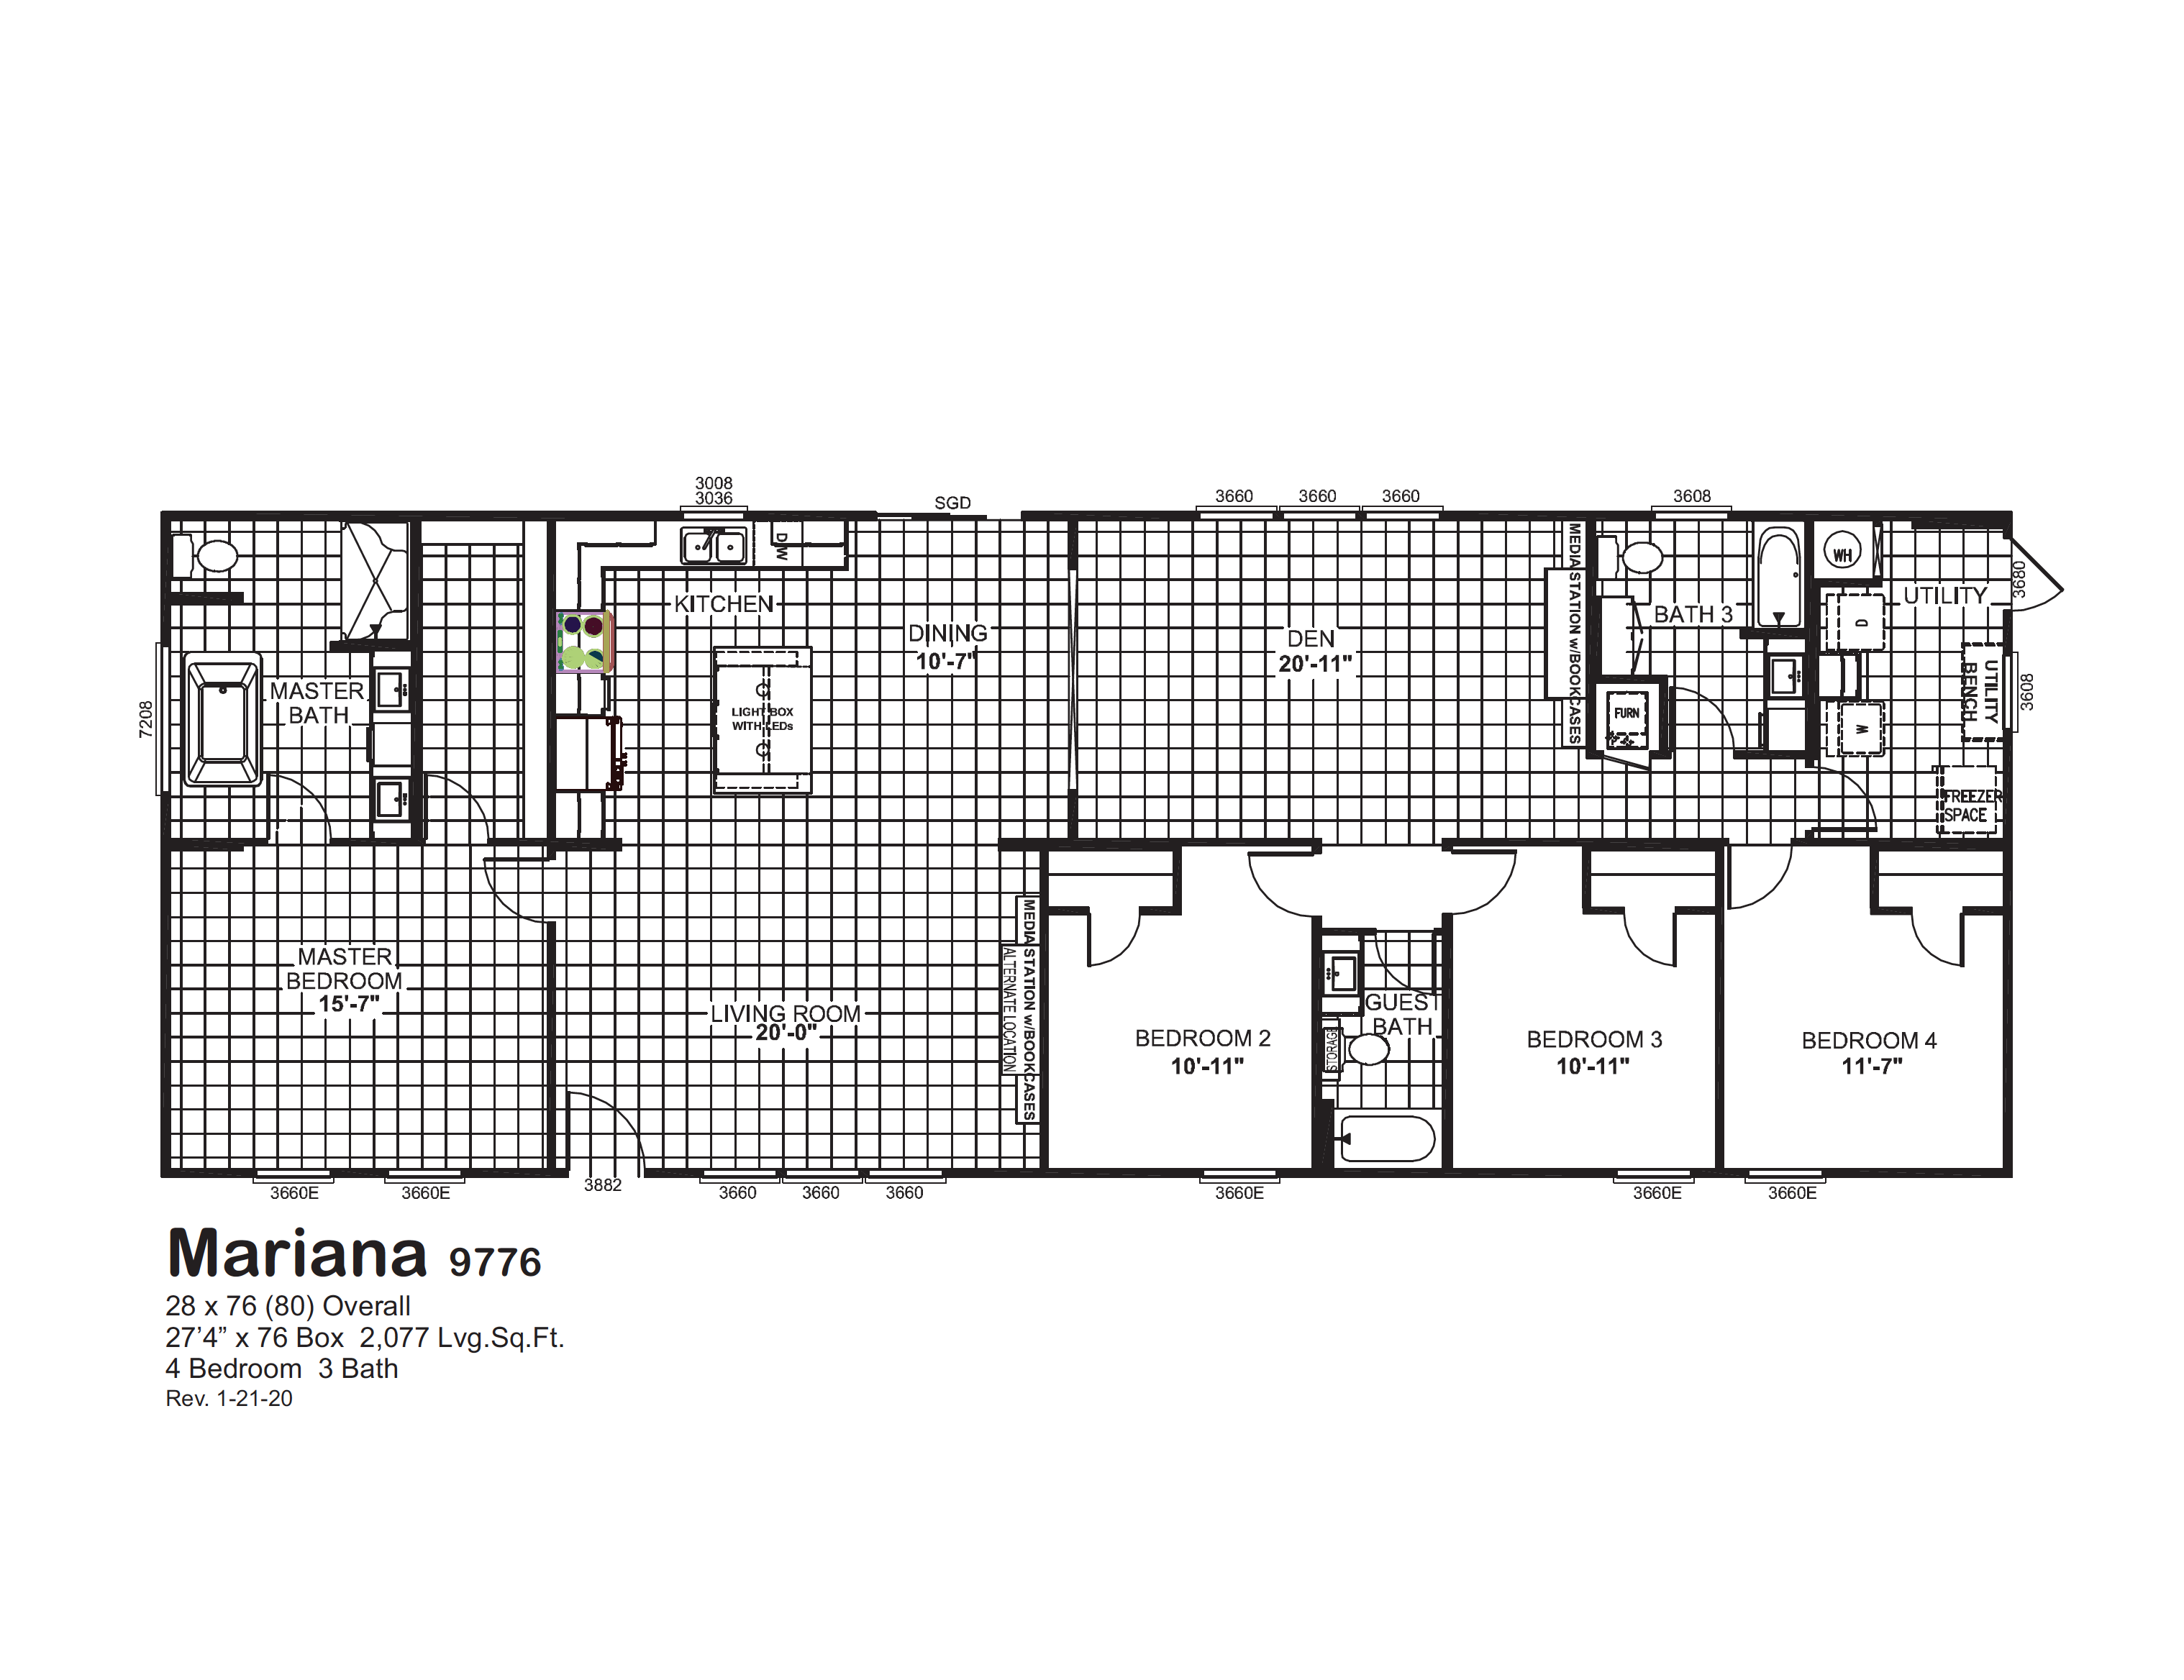 Mariana 9776 Floorplan